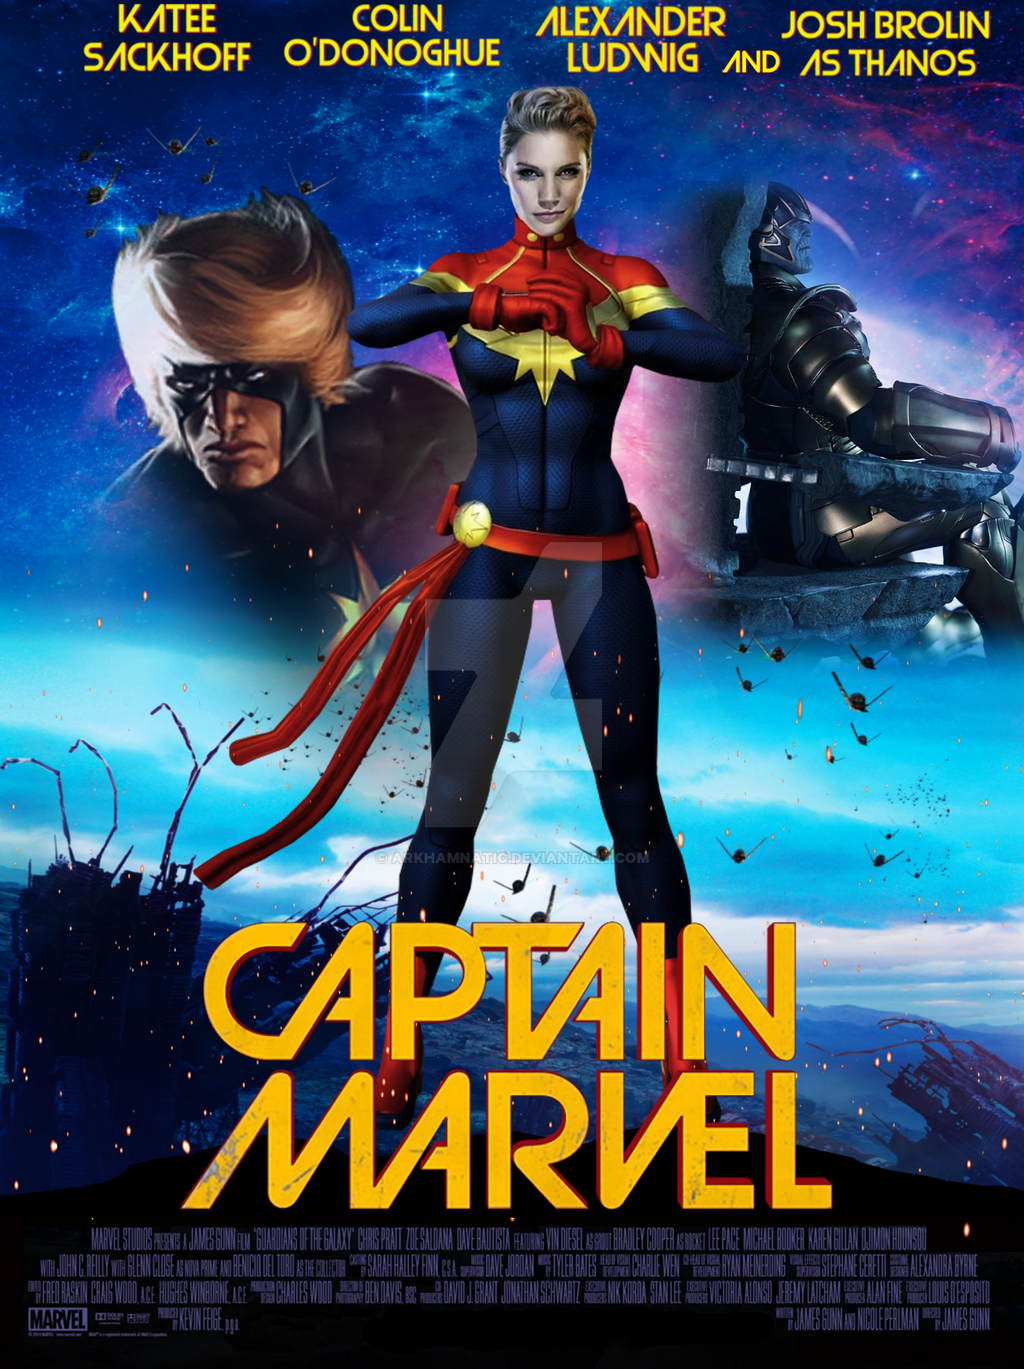 Captain Marvel movie poster by ArkhamNatic on DeviantArt